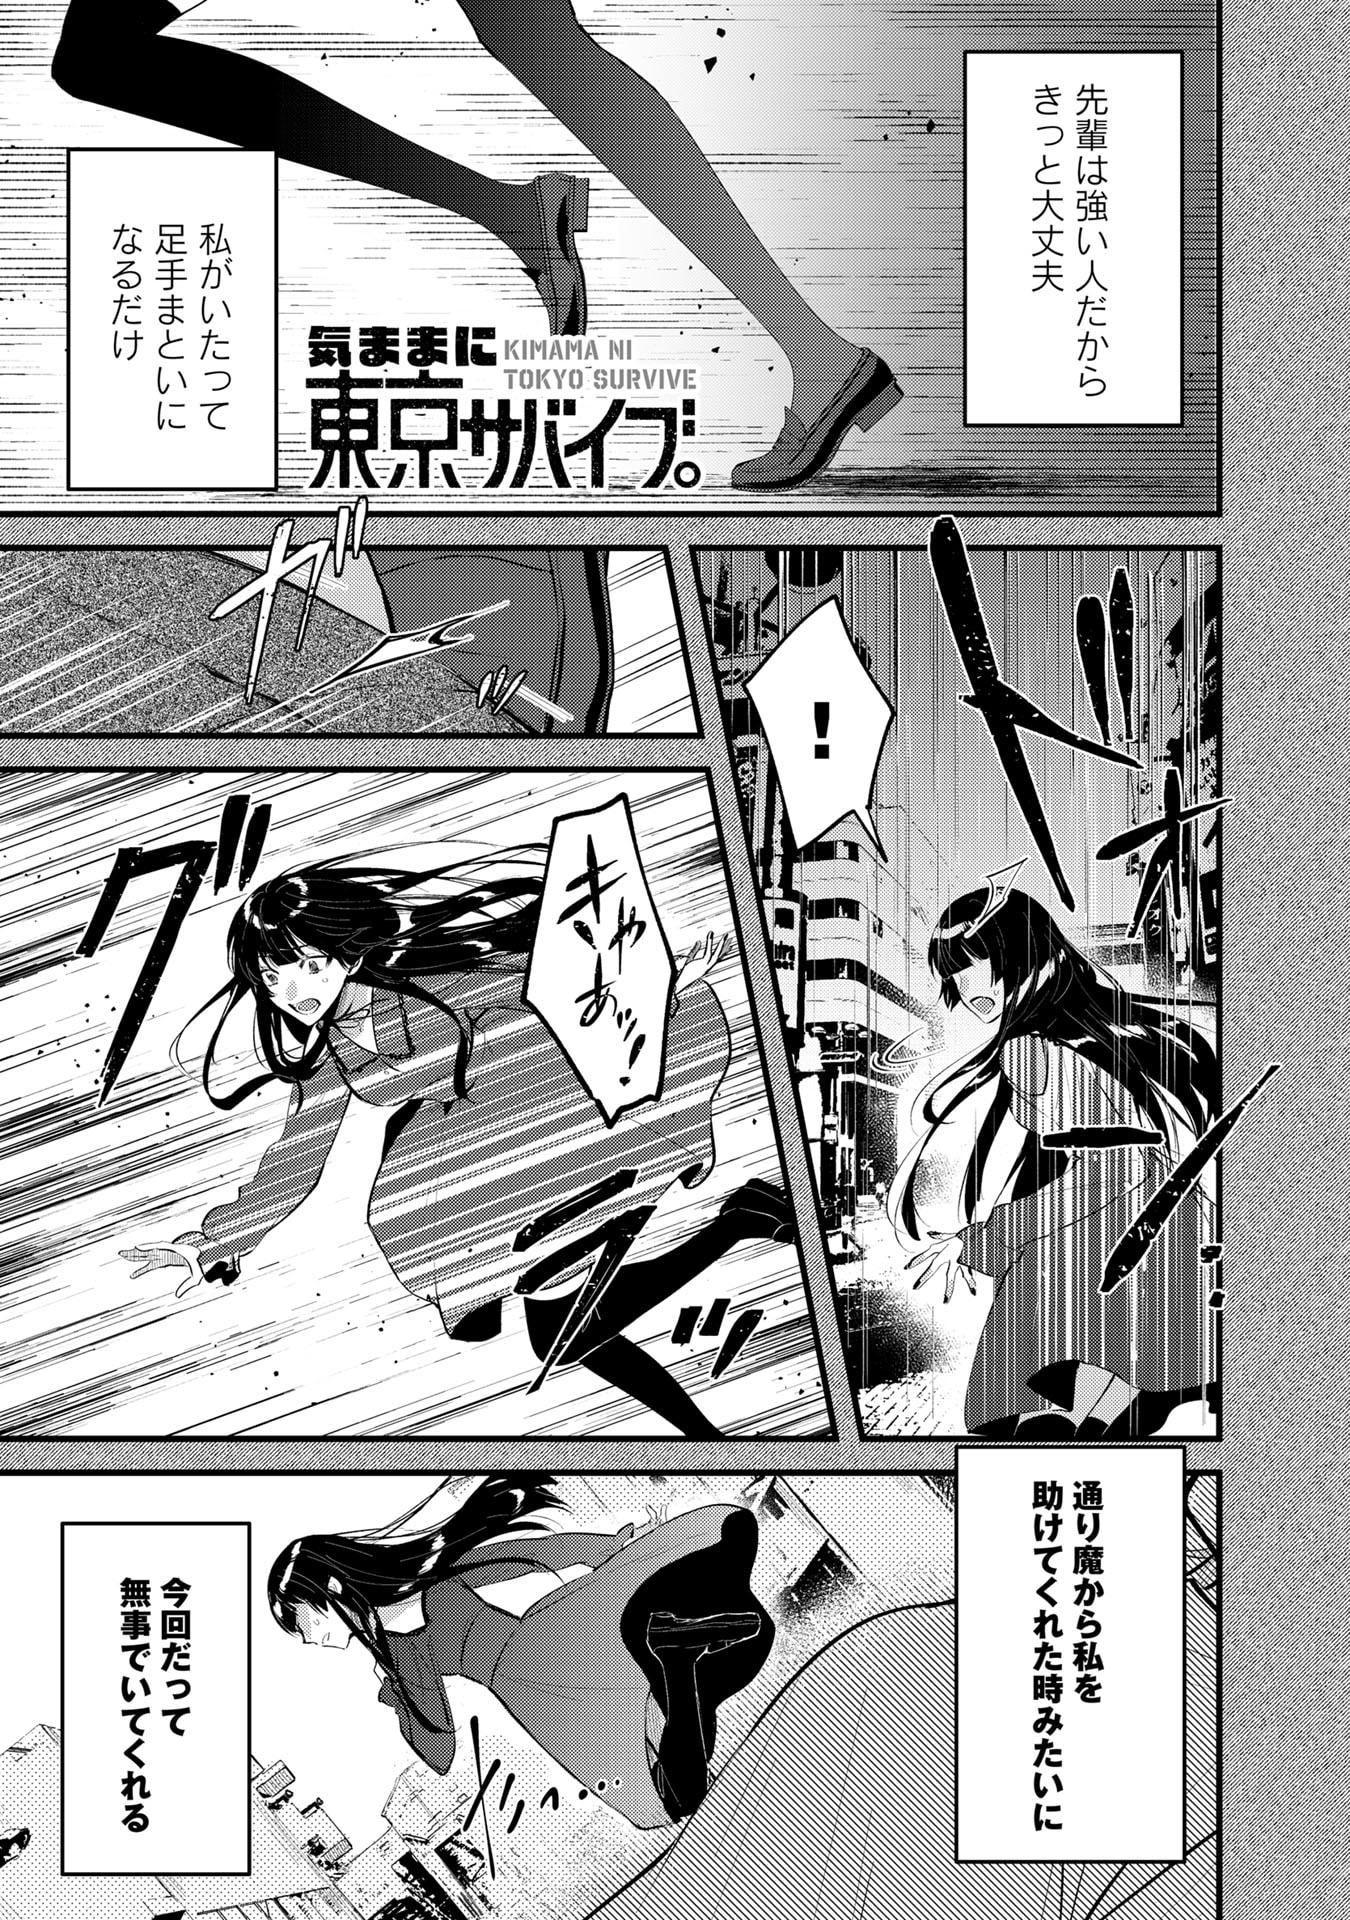 Kimama ni Tokyo Survive - Chapter 16 - Page 1